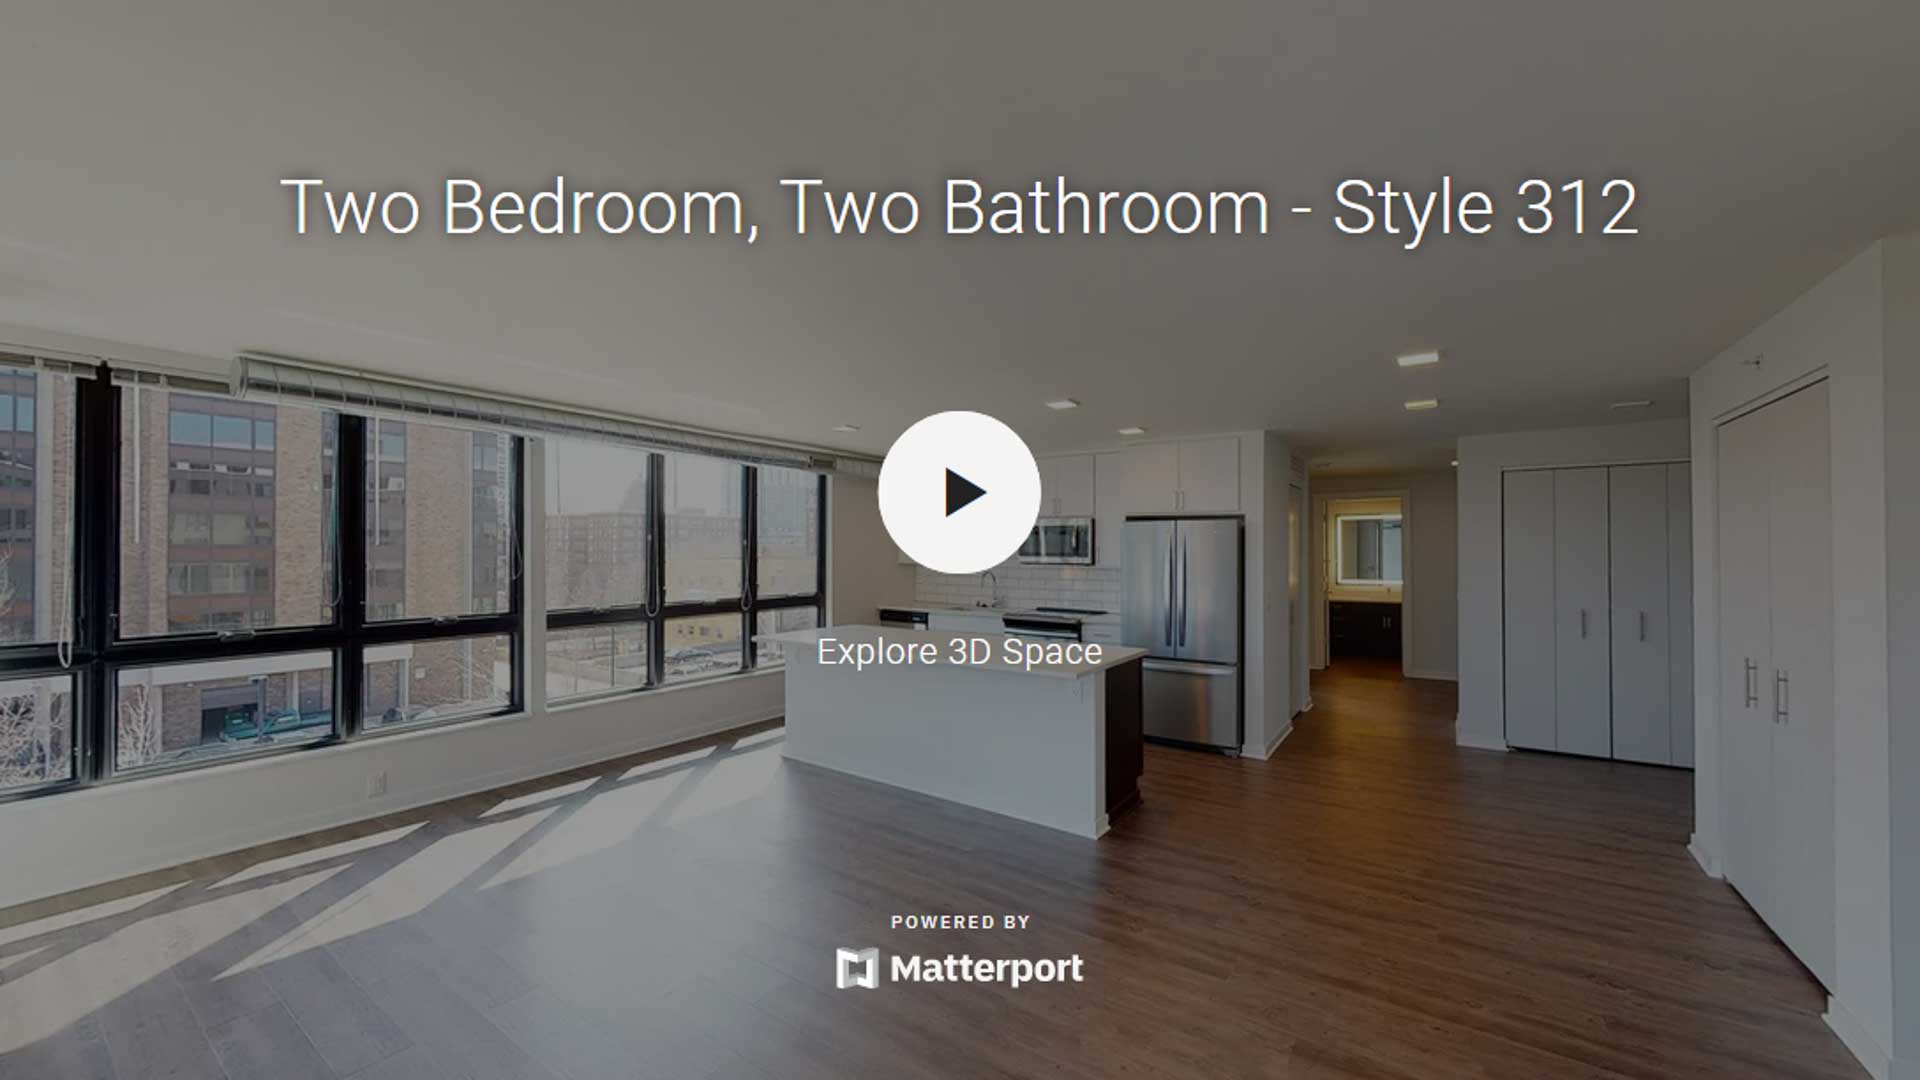 Two Bedroom, Two Bathroom - Style 312